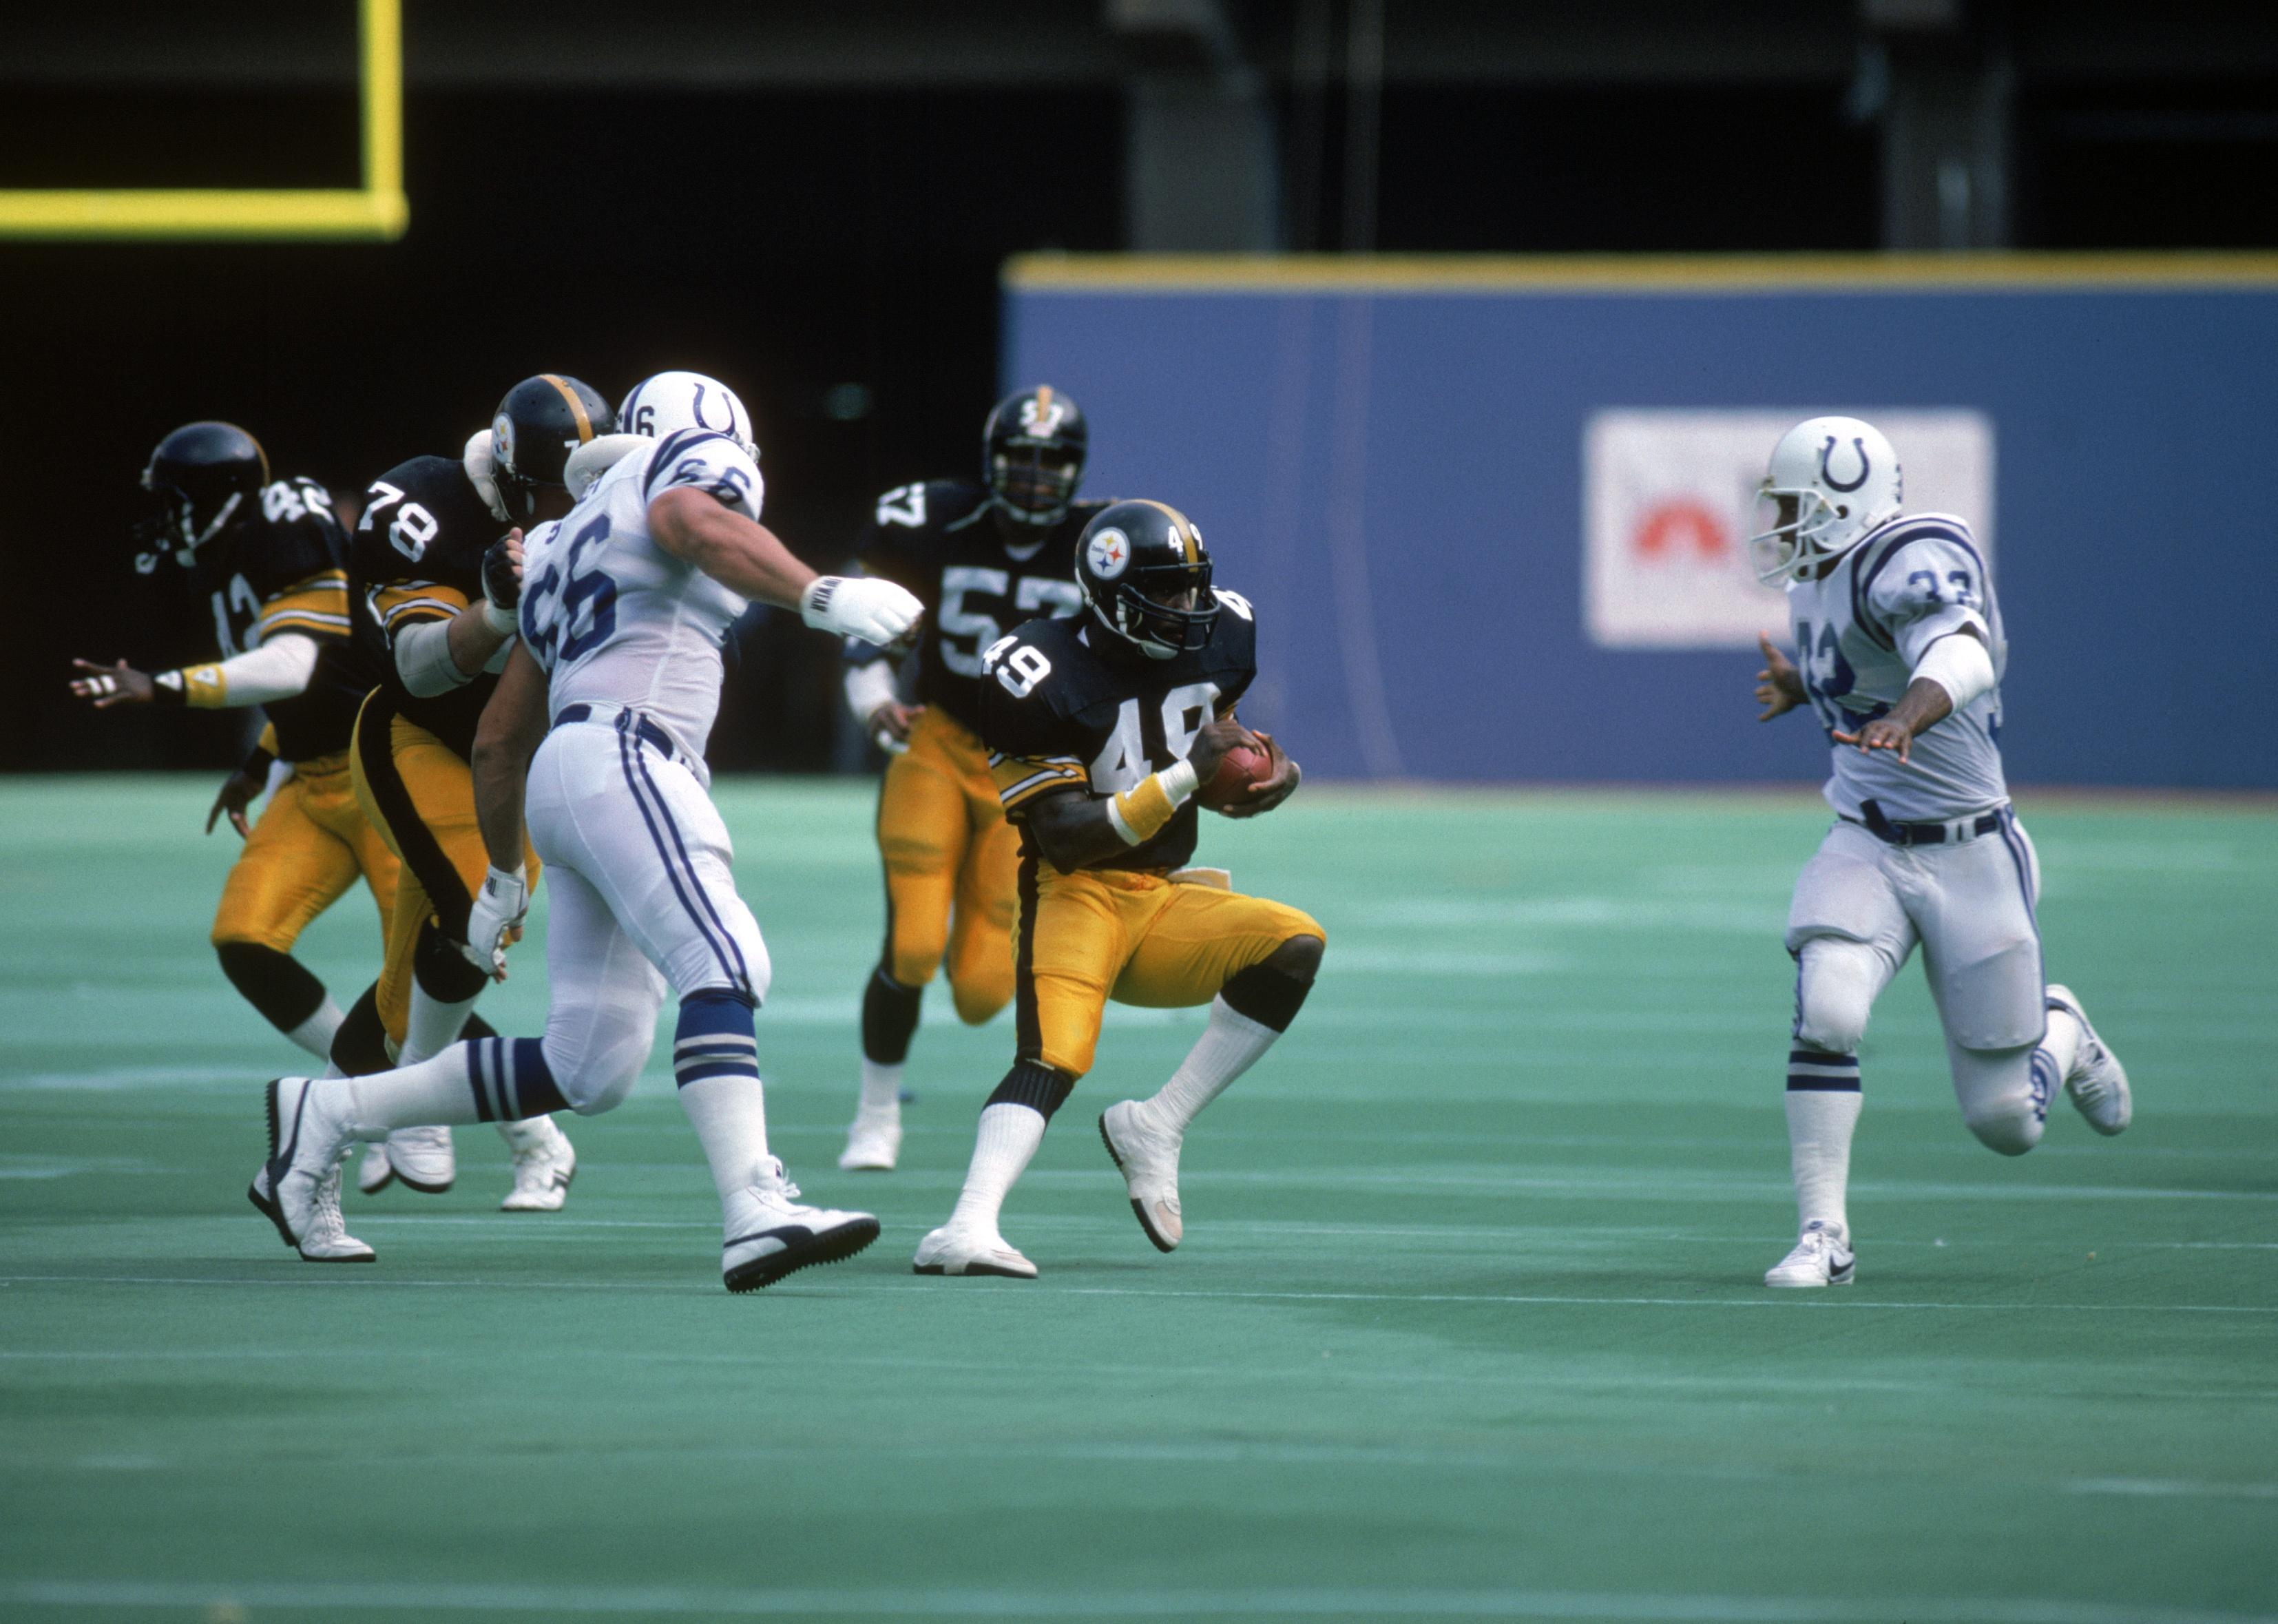 Cornerback Dwayne Woodruff #49 of the Pittsburgh Steelers returns an interception.